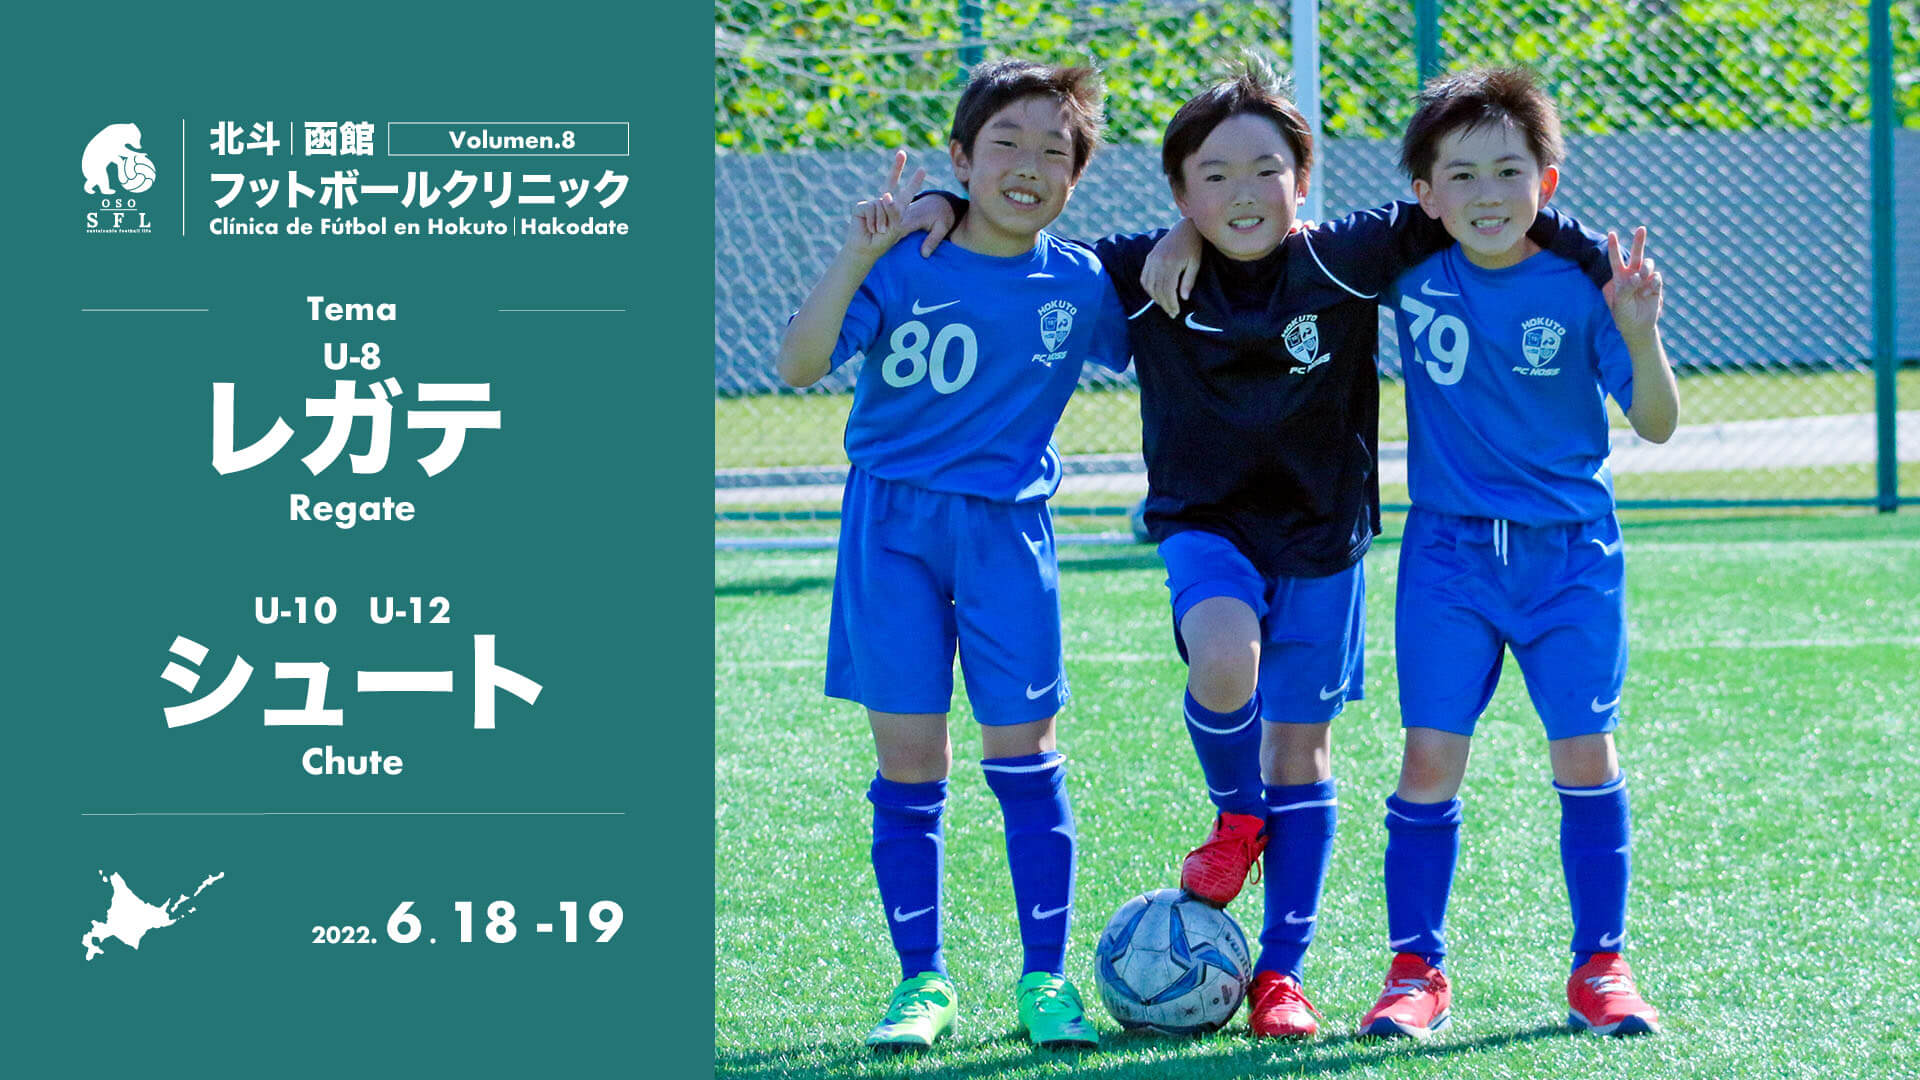 notice-hokuto-hakodate-football-clinic-2022-vol8